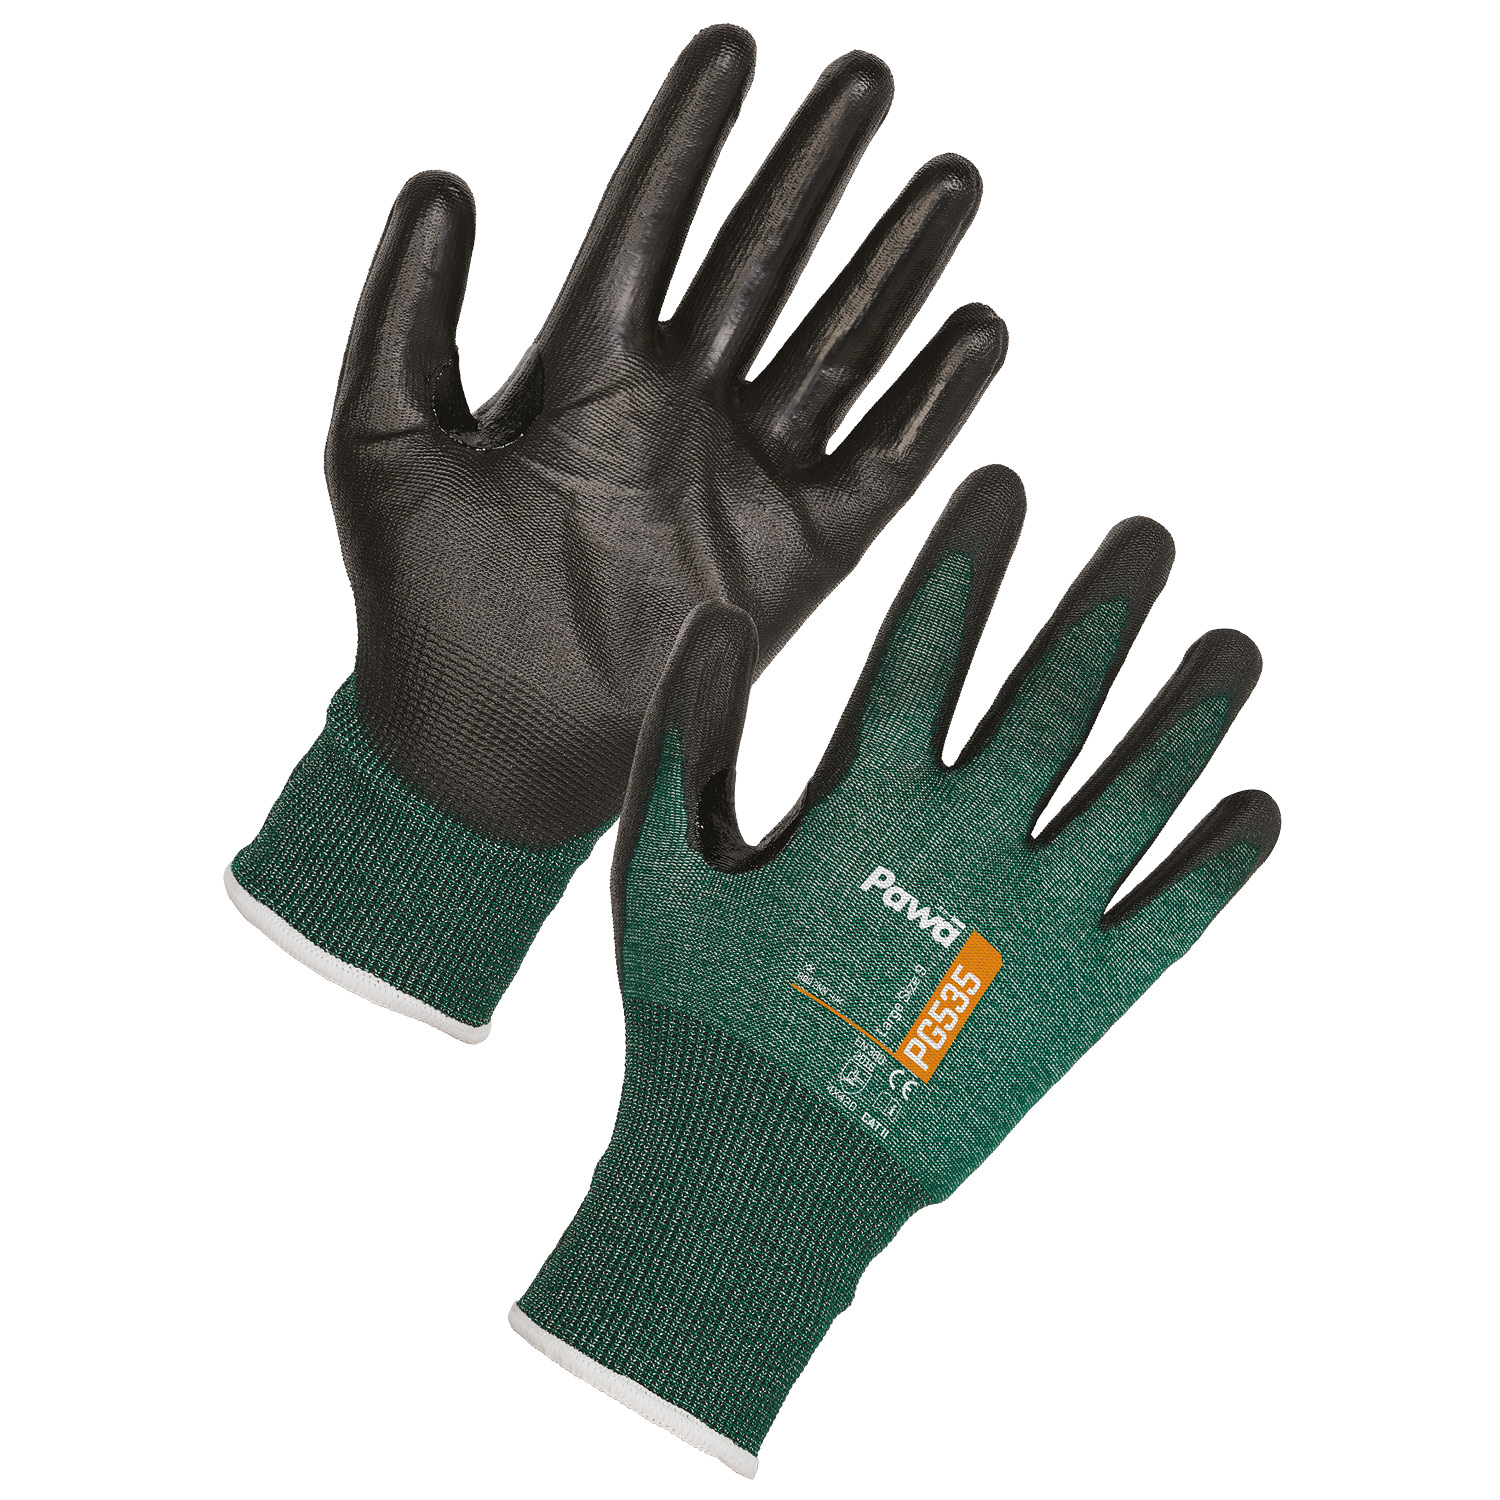 Pawa PG535 18G Cut D Glove PU Coating Green/Black - Small/7